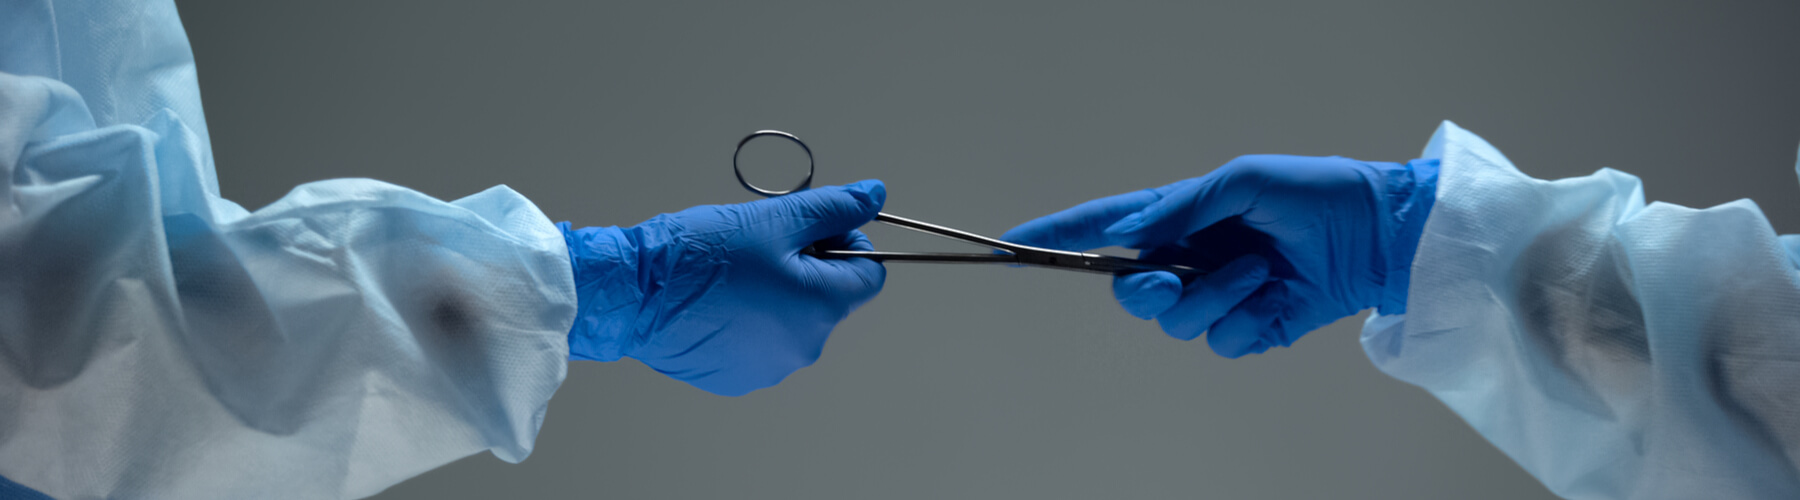 Surgeon giving scissors against dark background, illegal black-market surgery